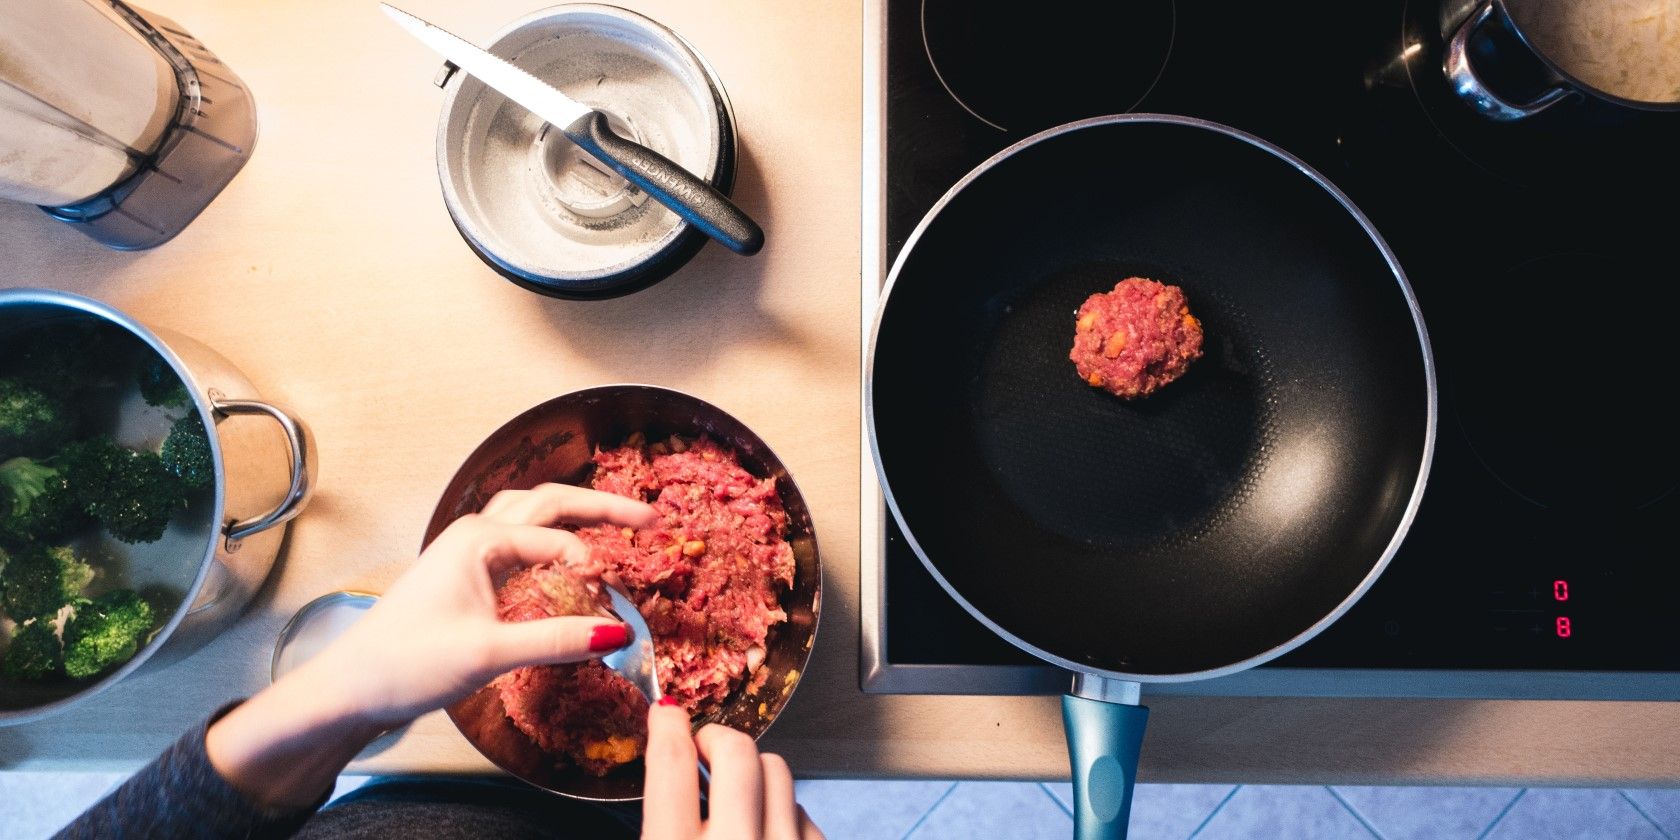 hands frying meat in a pan